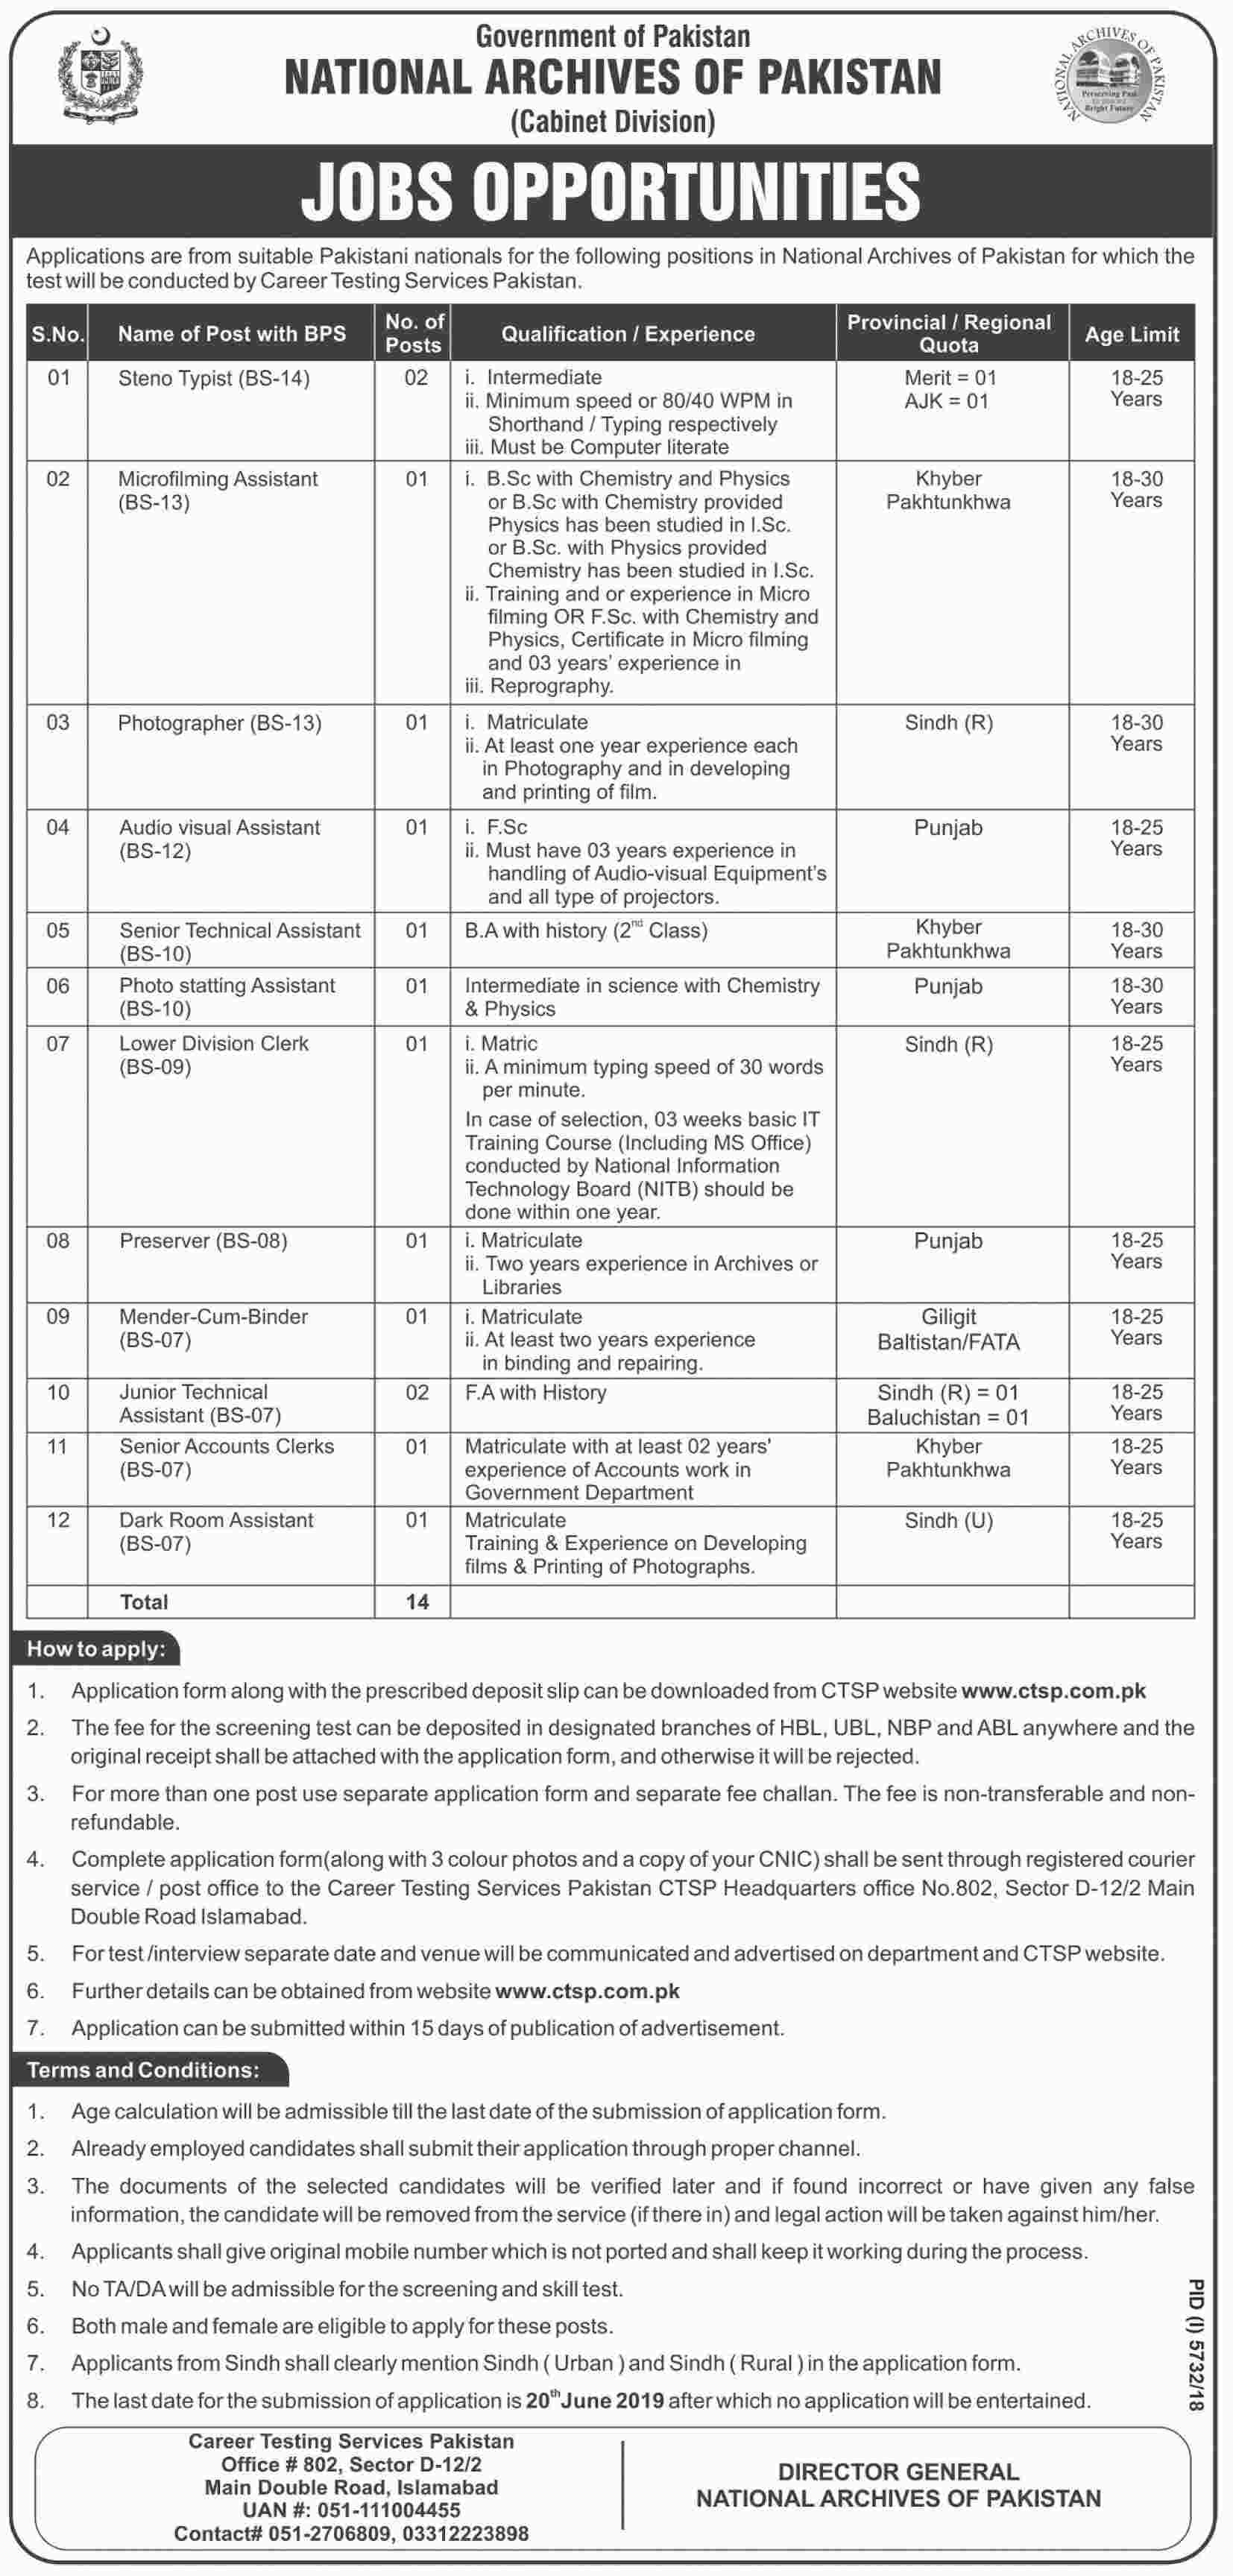 National Archives of Pakistan Govt of Pakistan jobs 2019